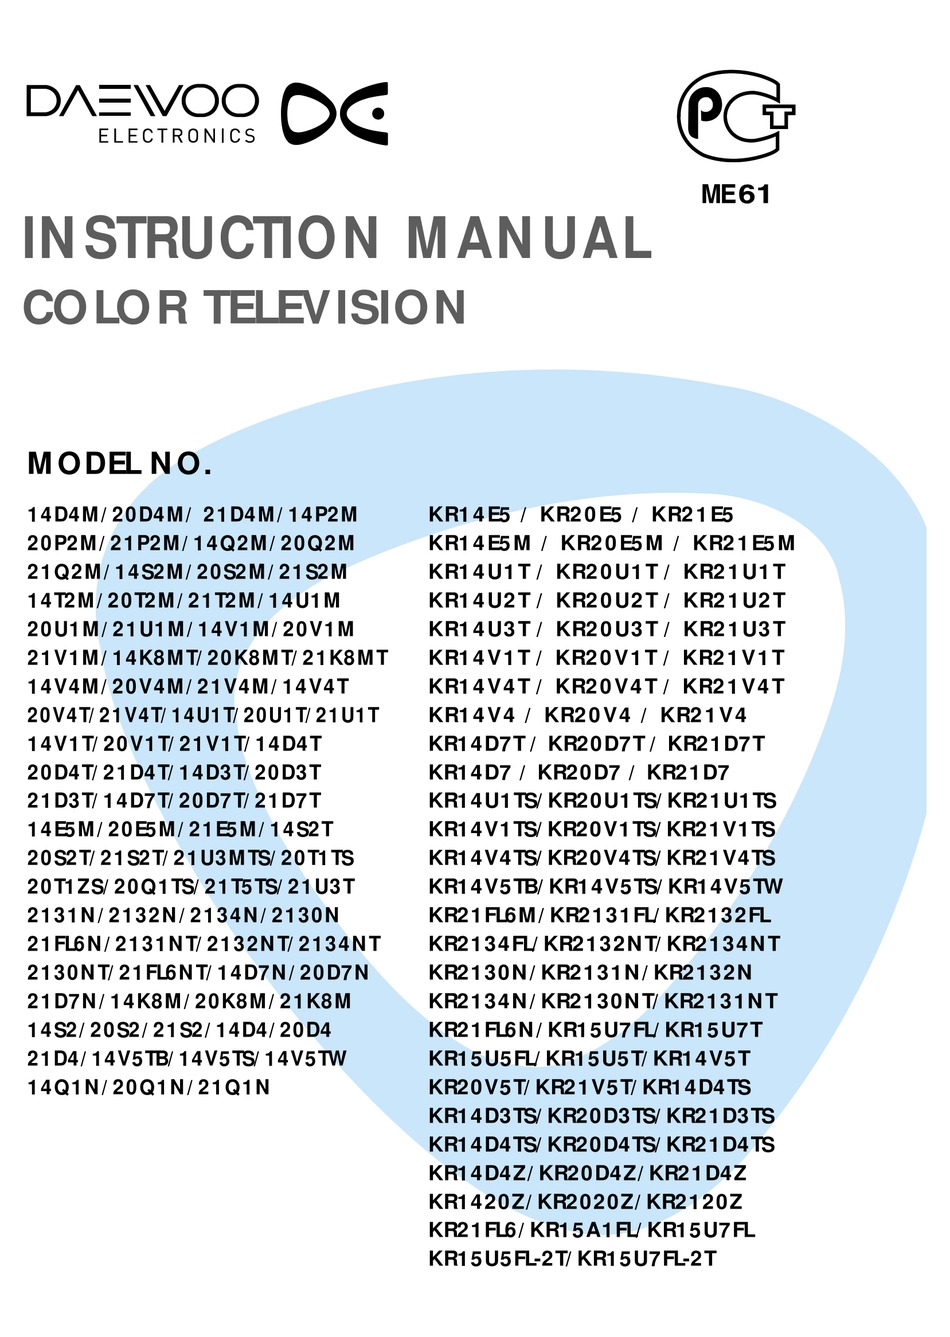 DAEWOO 141VT INSTRUCTION MANUAL Pdf Download | ManualsLib